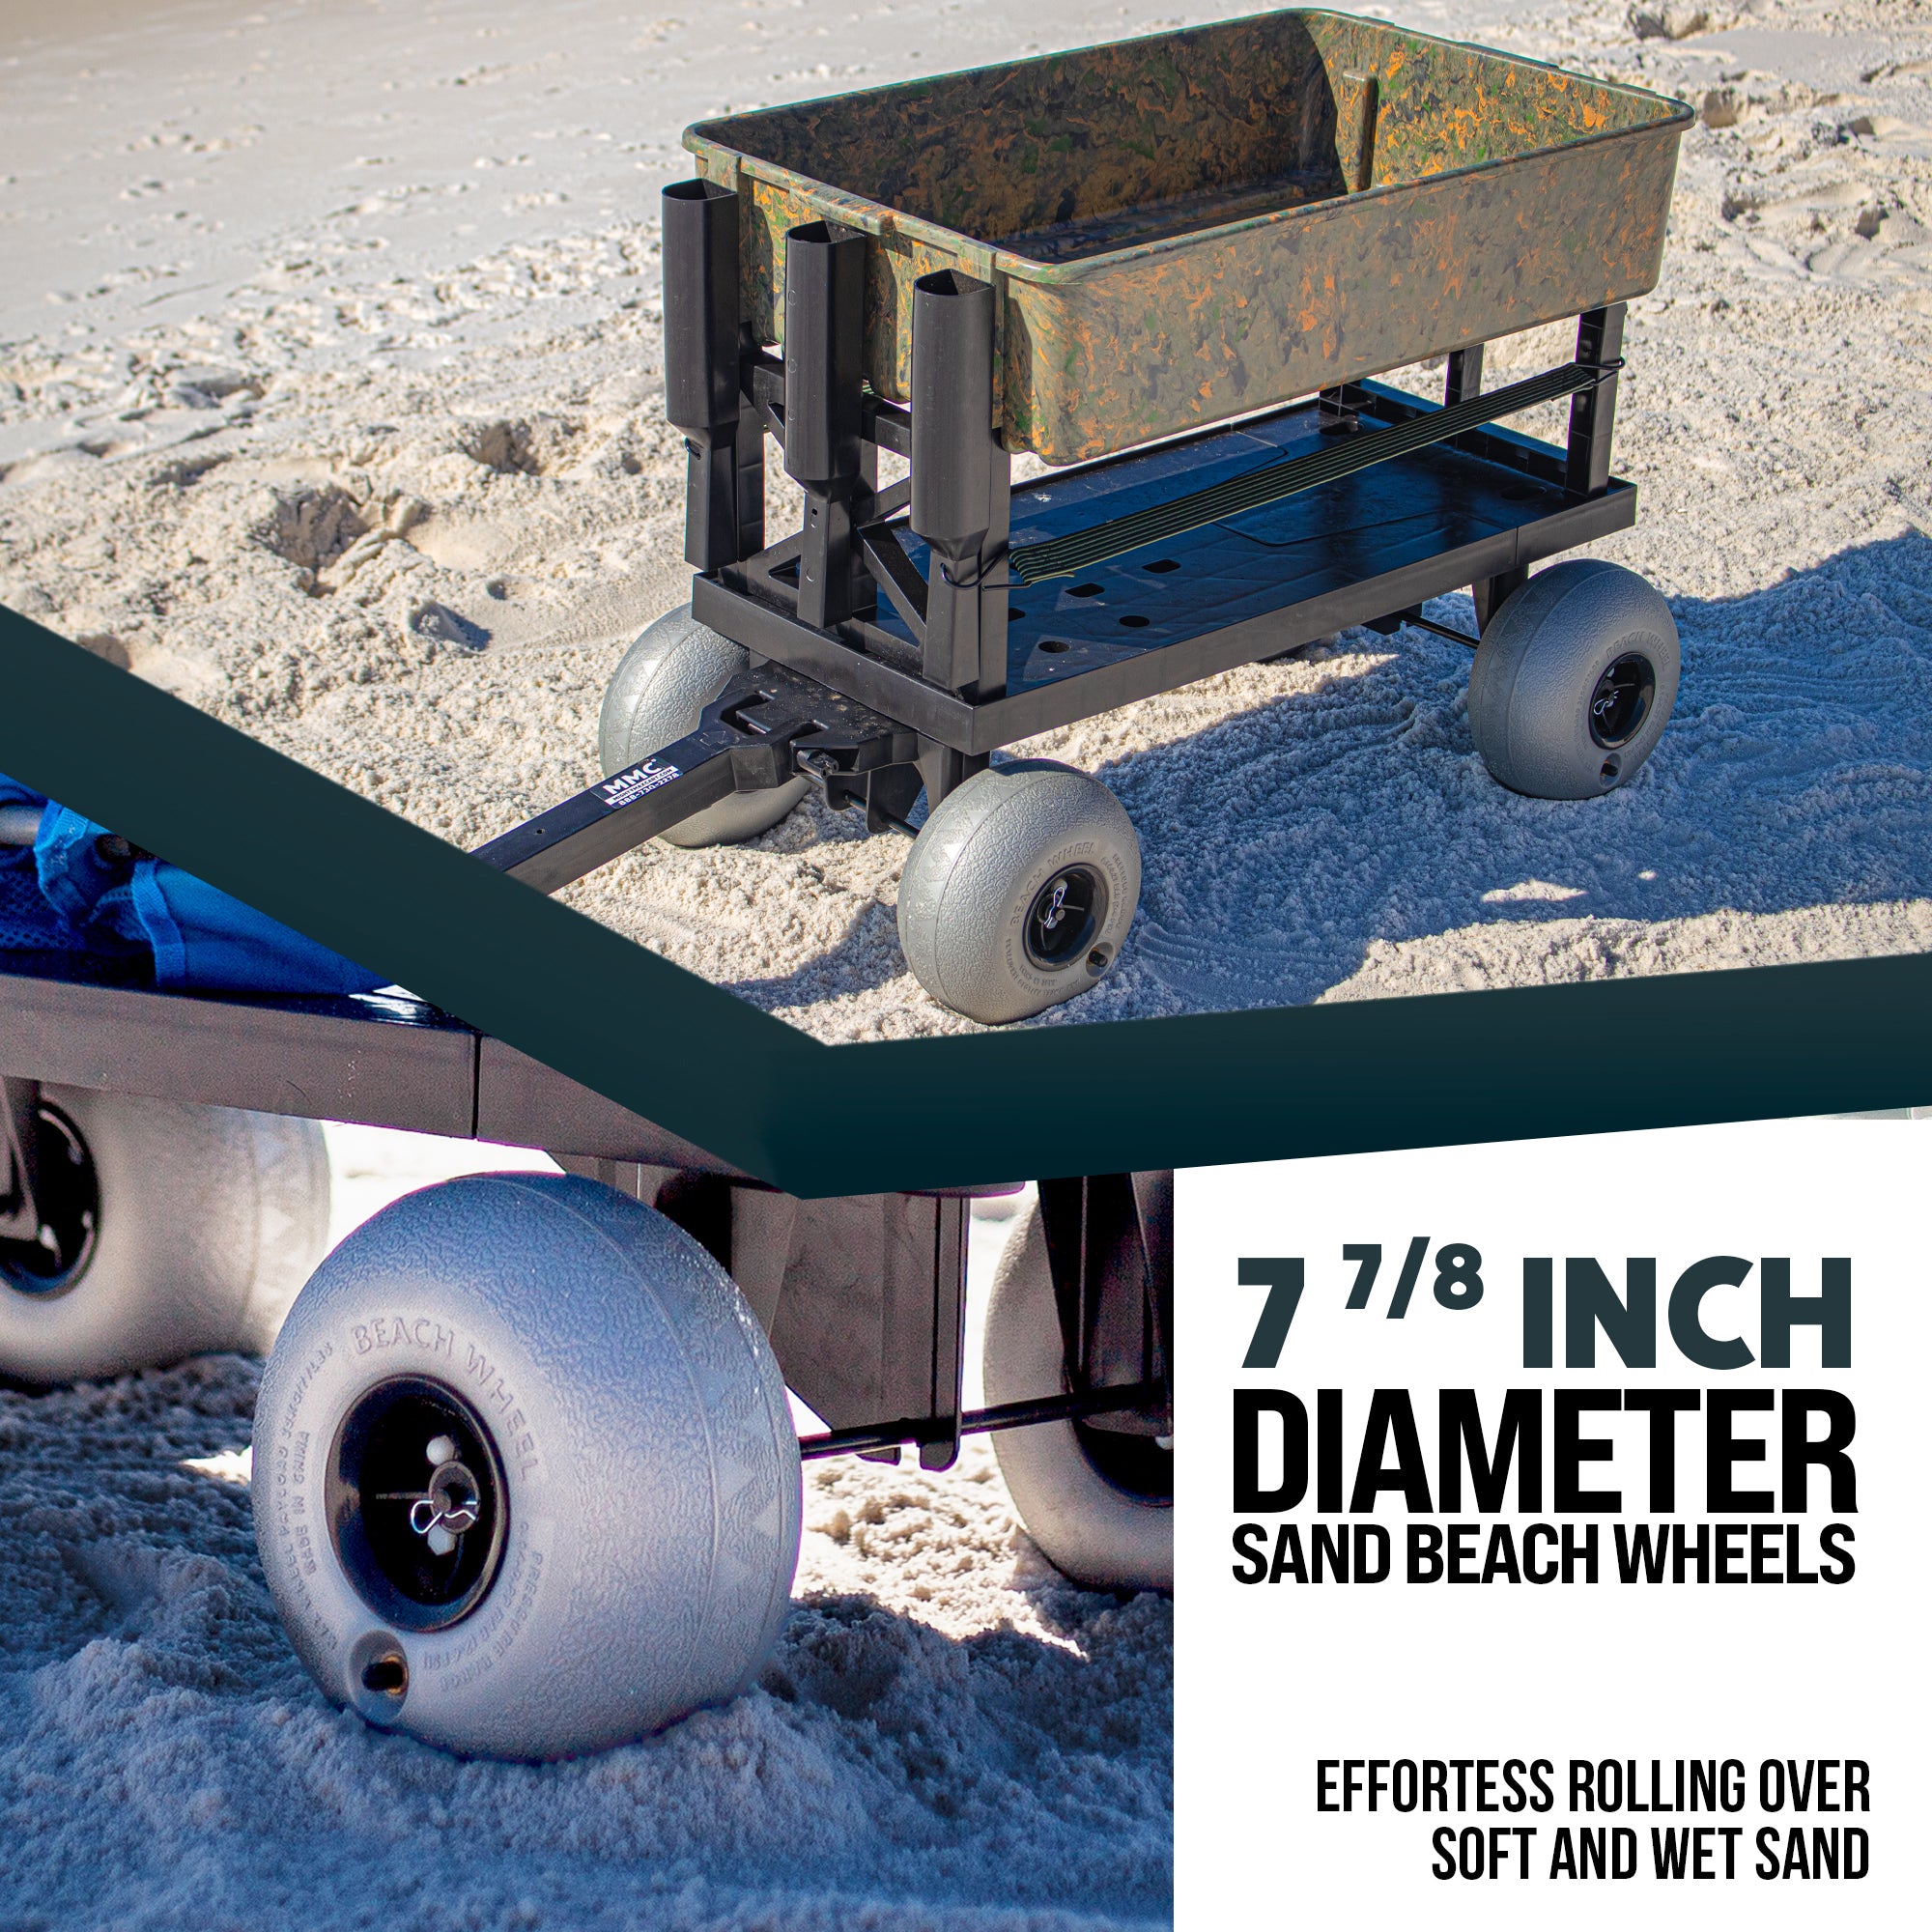 mighty-max-cart-camo-beach-wagon-big-sand-balloon-wheels-size